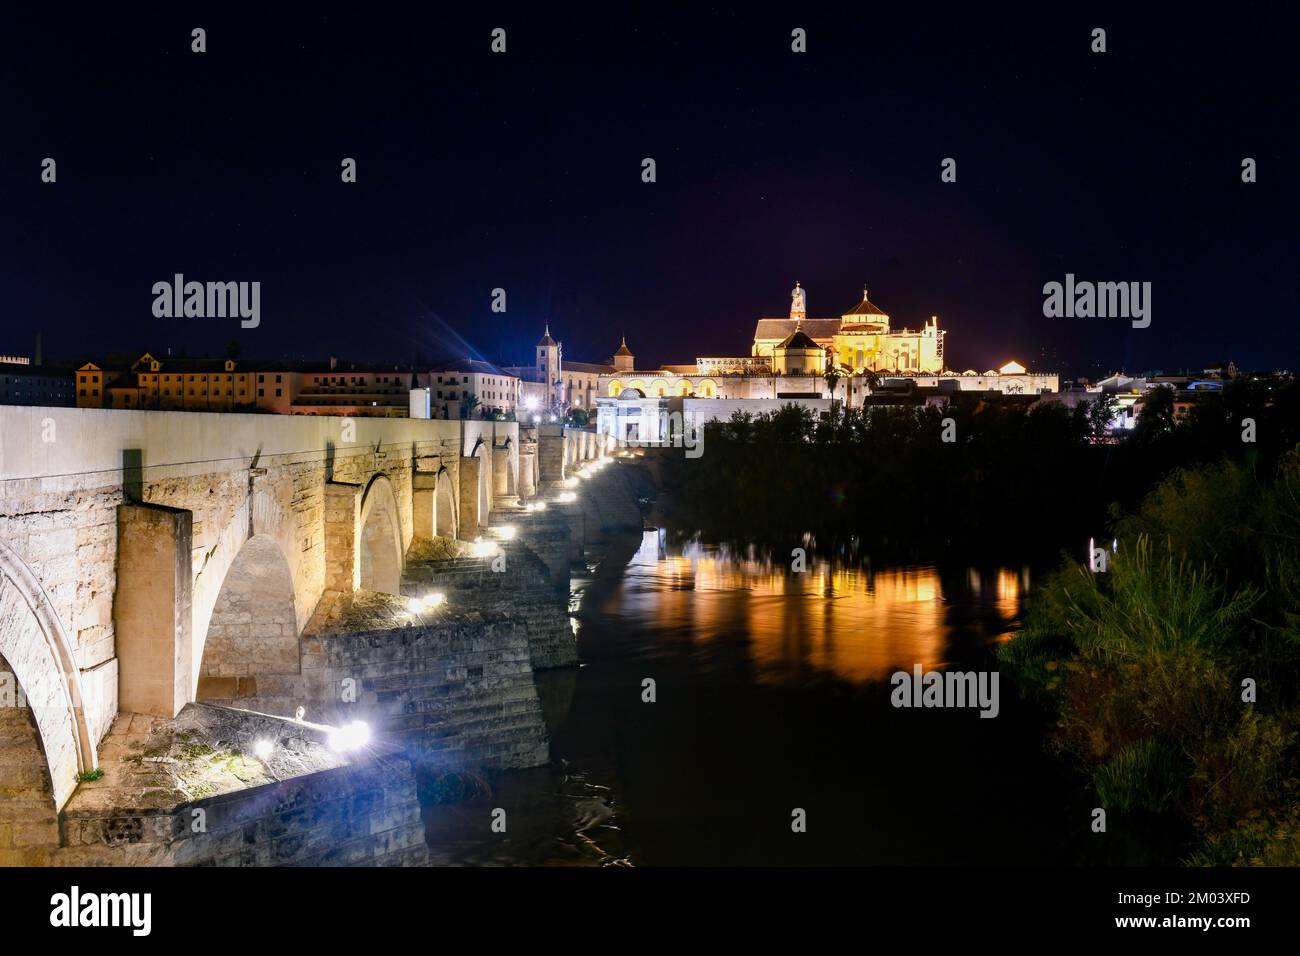 View of the Roman Bridge, a stone bridge that spans the river Guadalquivir in Cordoba, Spain at night. Stock Photo